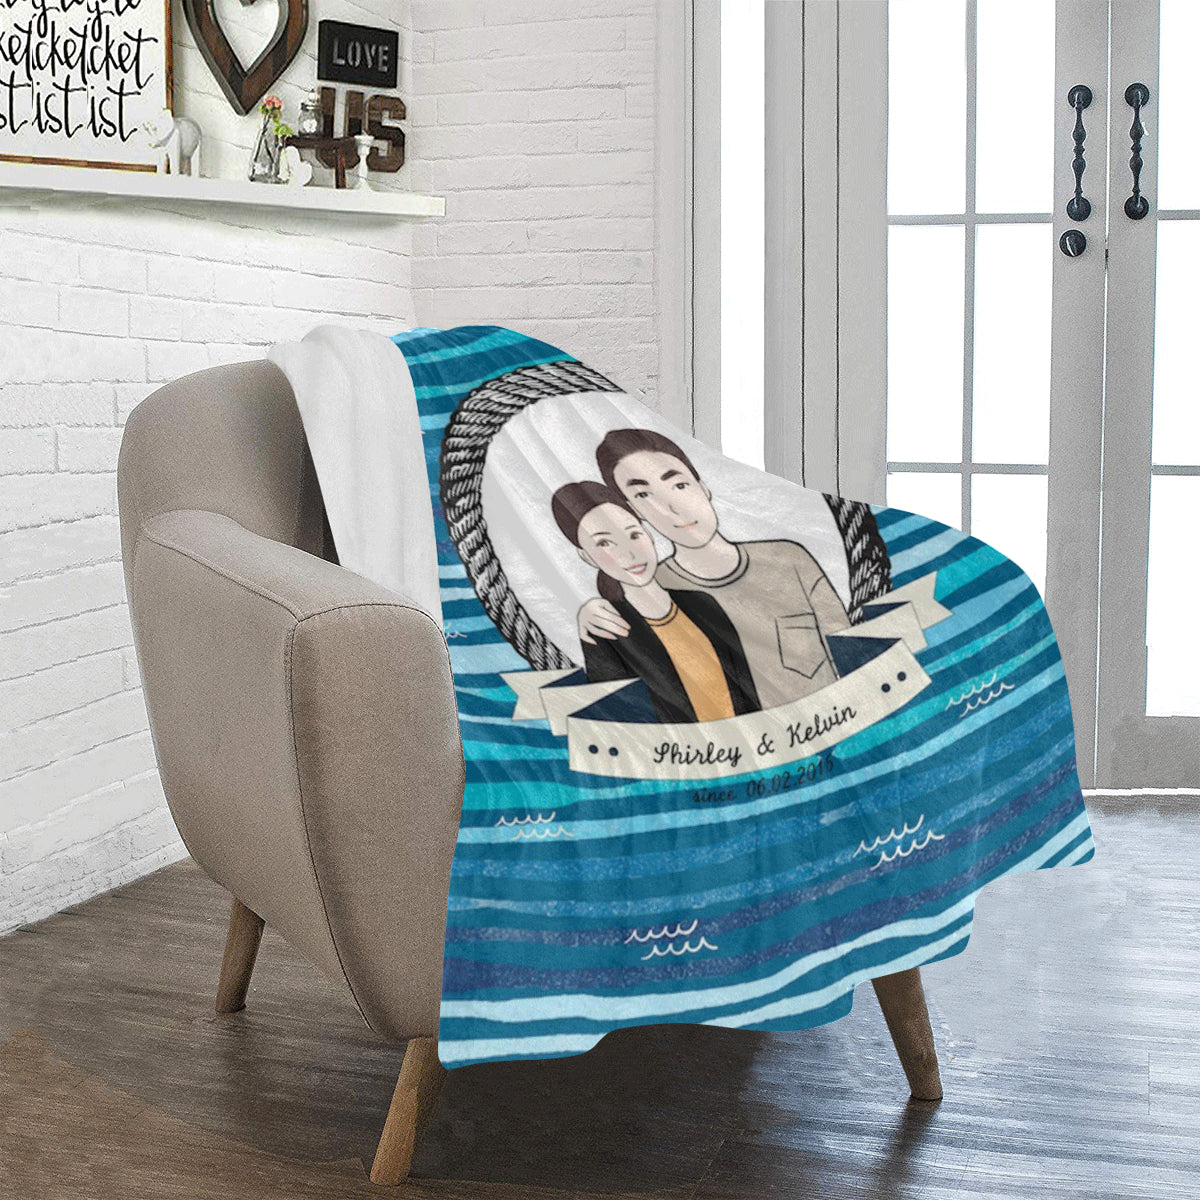 Marina Wave款式客製化插畫毛毯 Marina Wave- Custom Blanket with tailor-made illustration. - HKGIFTFORU